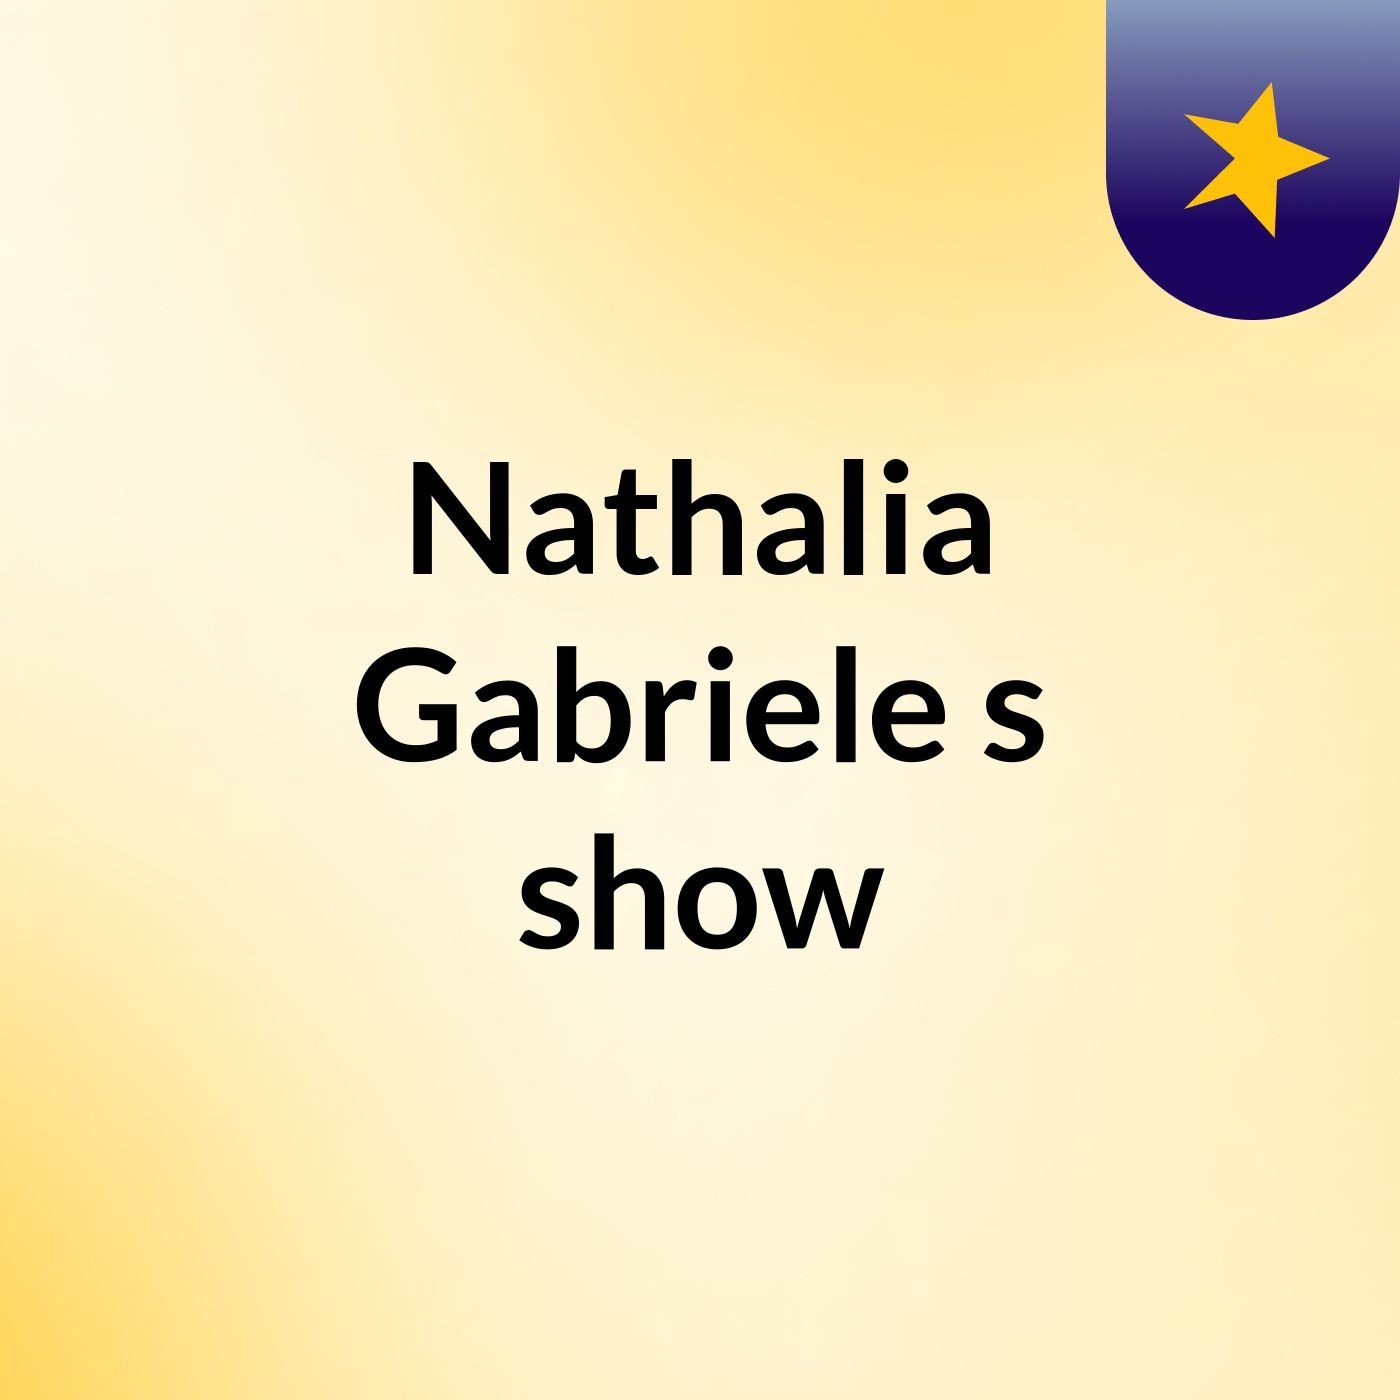 Nathalia Gabriele's show